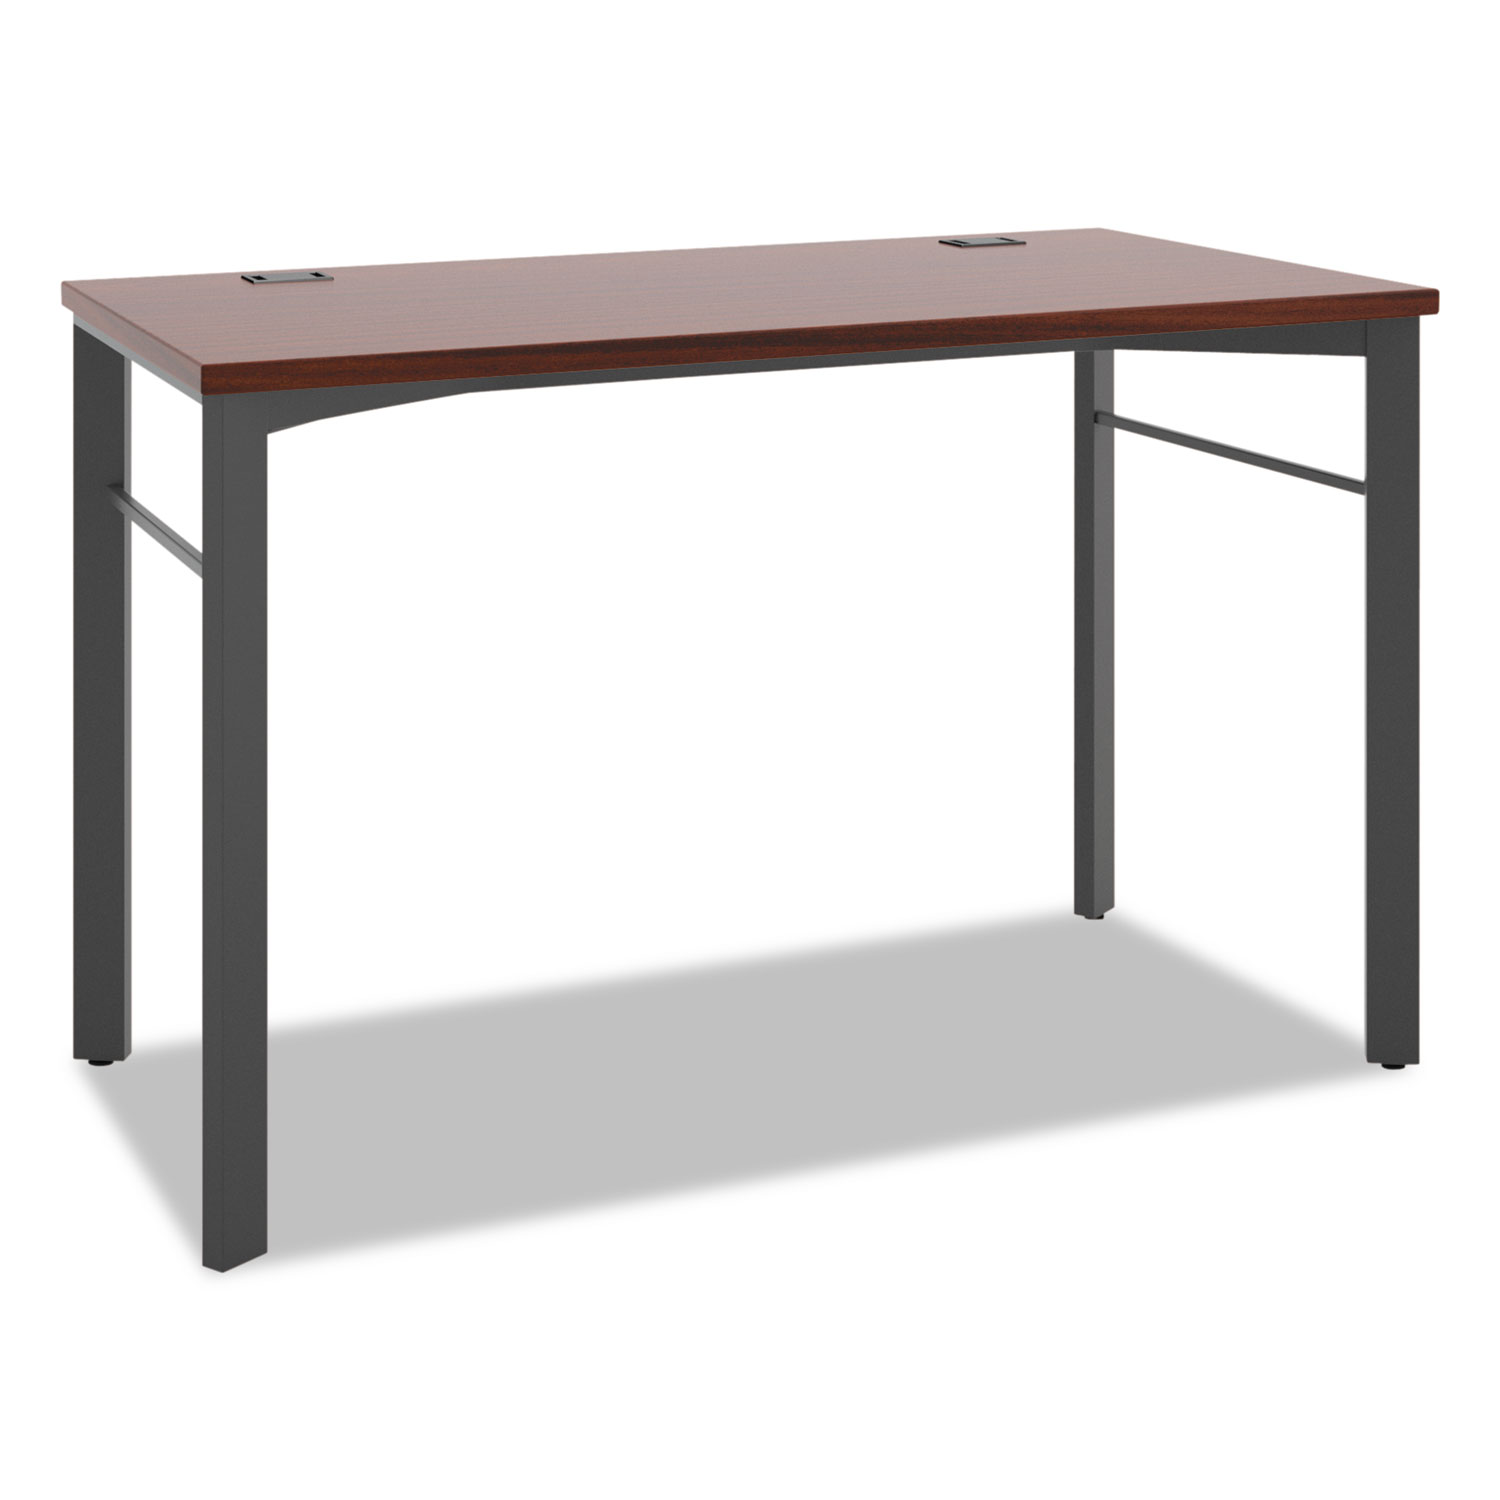  HON HMNG48WKSL.C1.A1 Manage Series Desk Table, 48w x 23.5d x 29.5h, Chestnut (BSXMNG48WKSLC) 